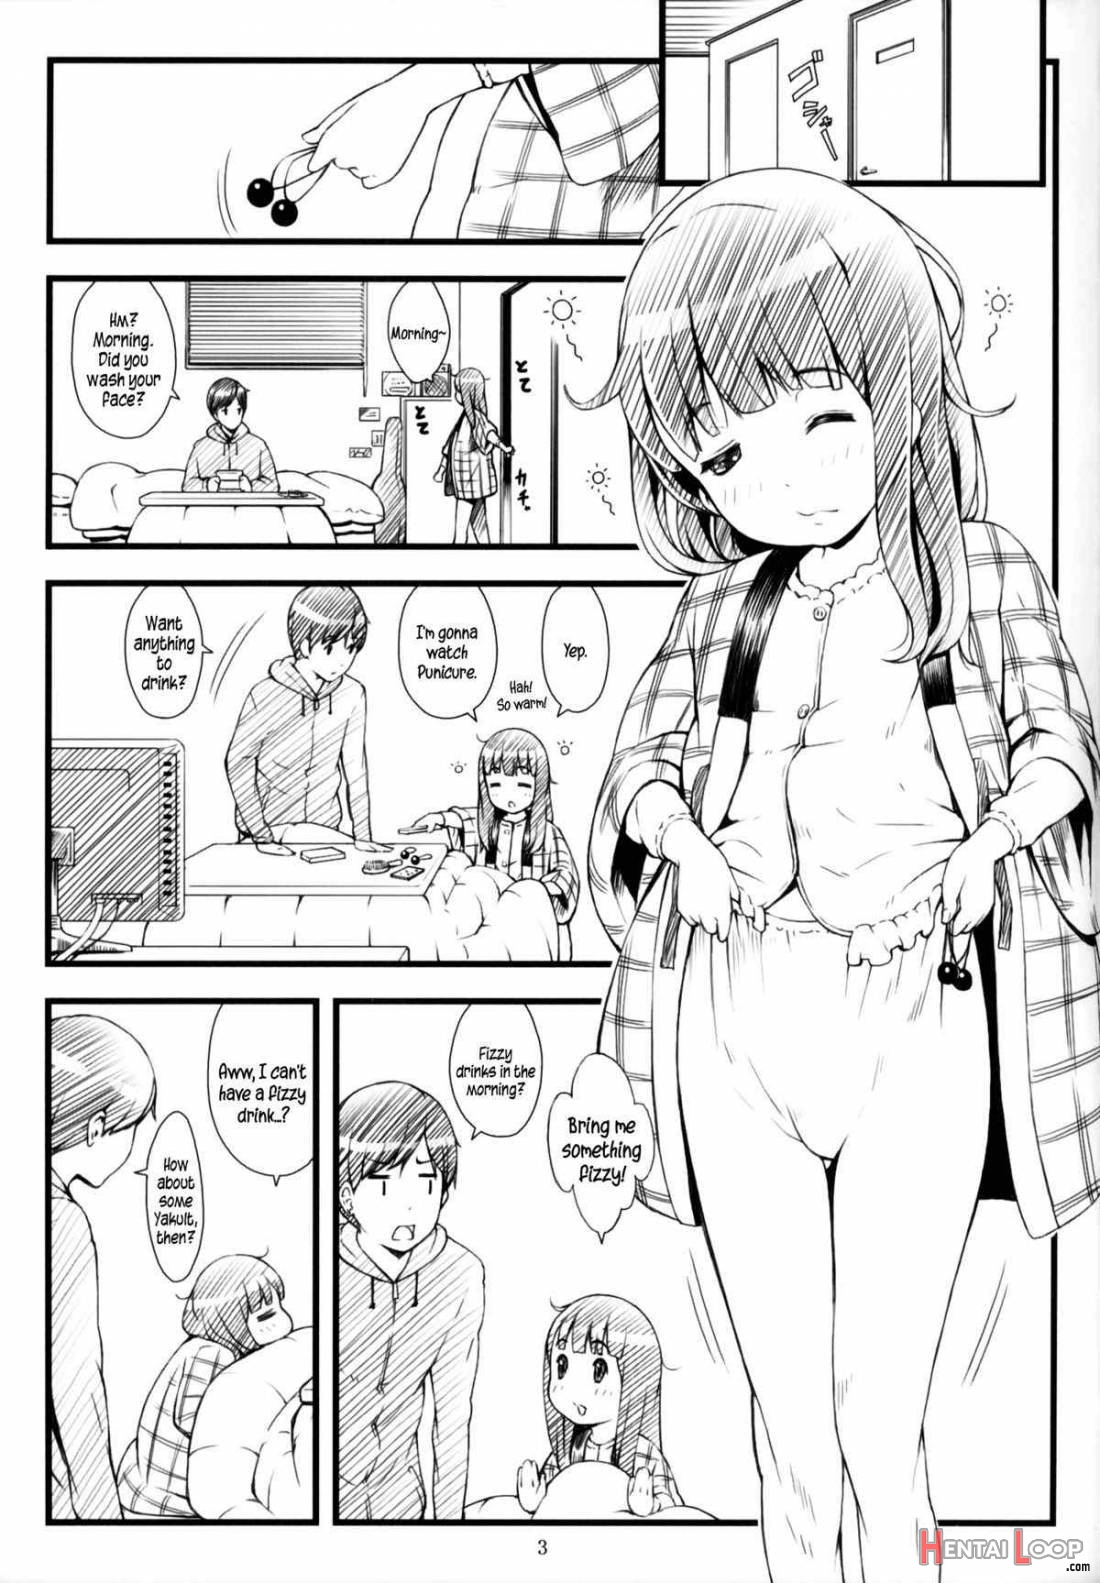 Kotatsu To Anime To Onii-chan page 2